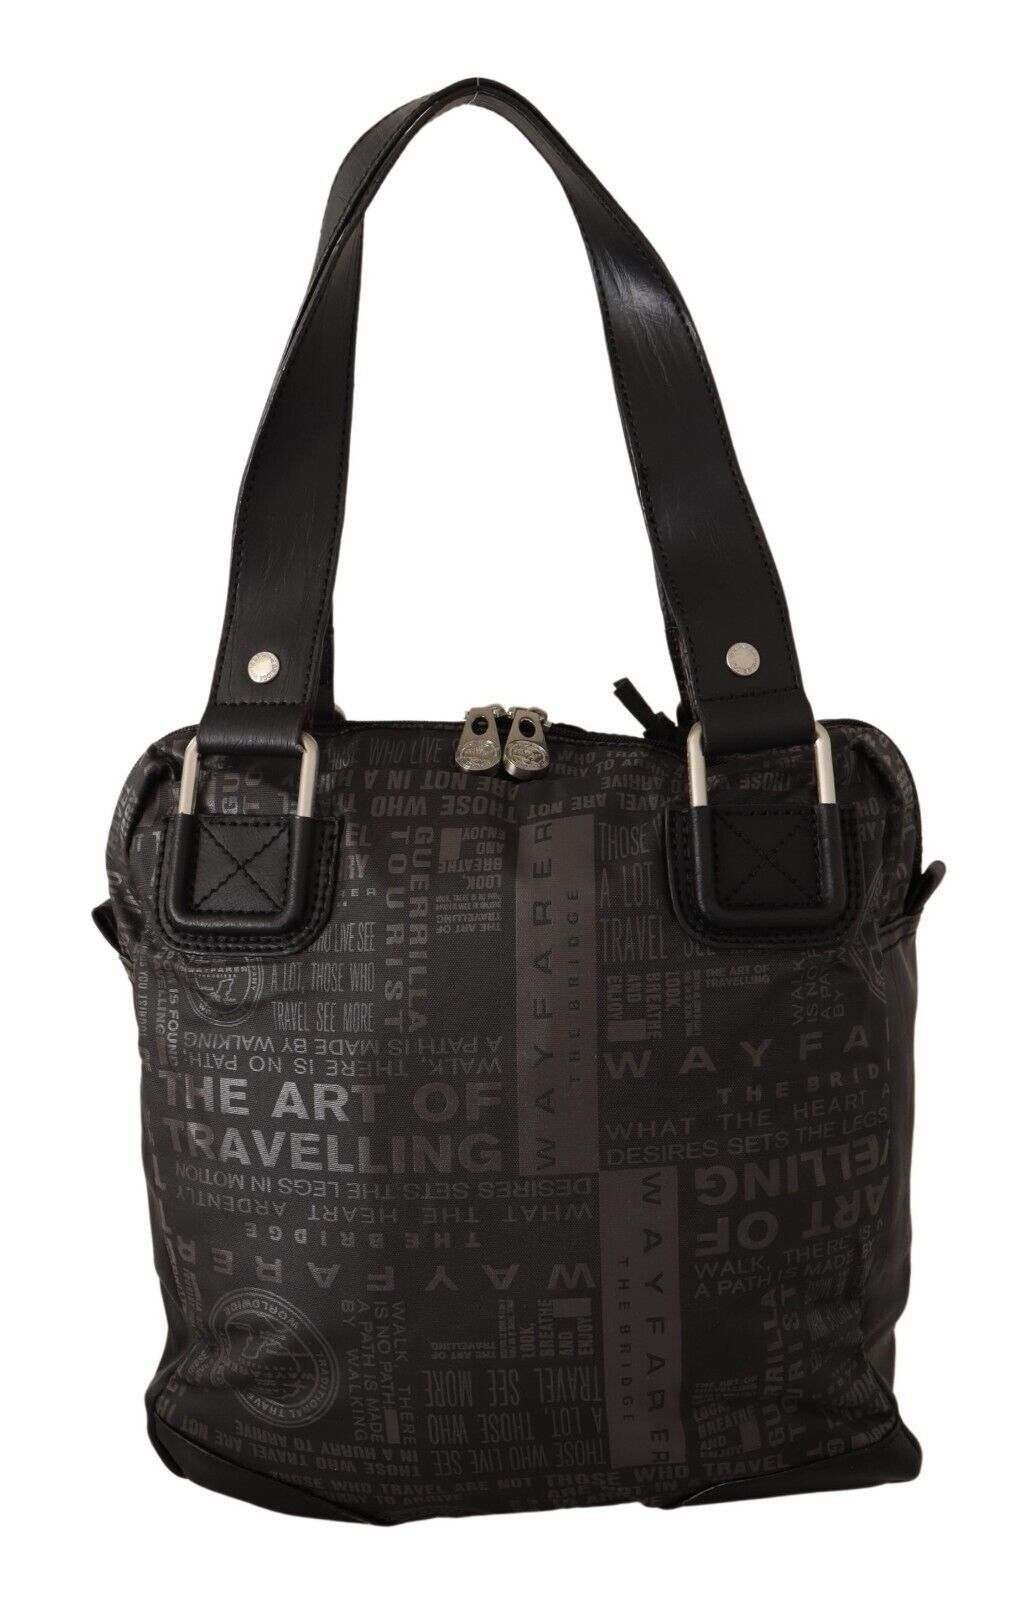 Chic Black and Gray Fabric Shoulder Handbag